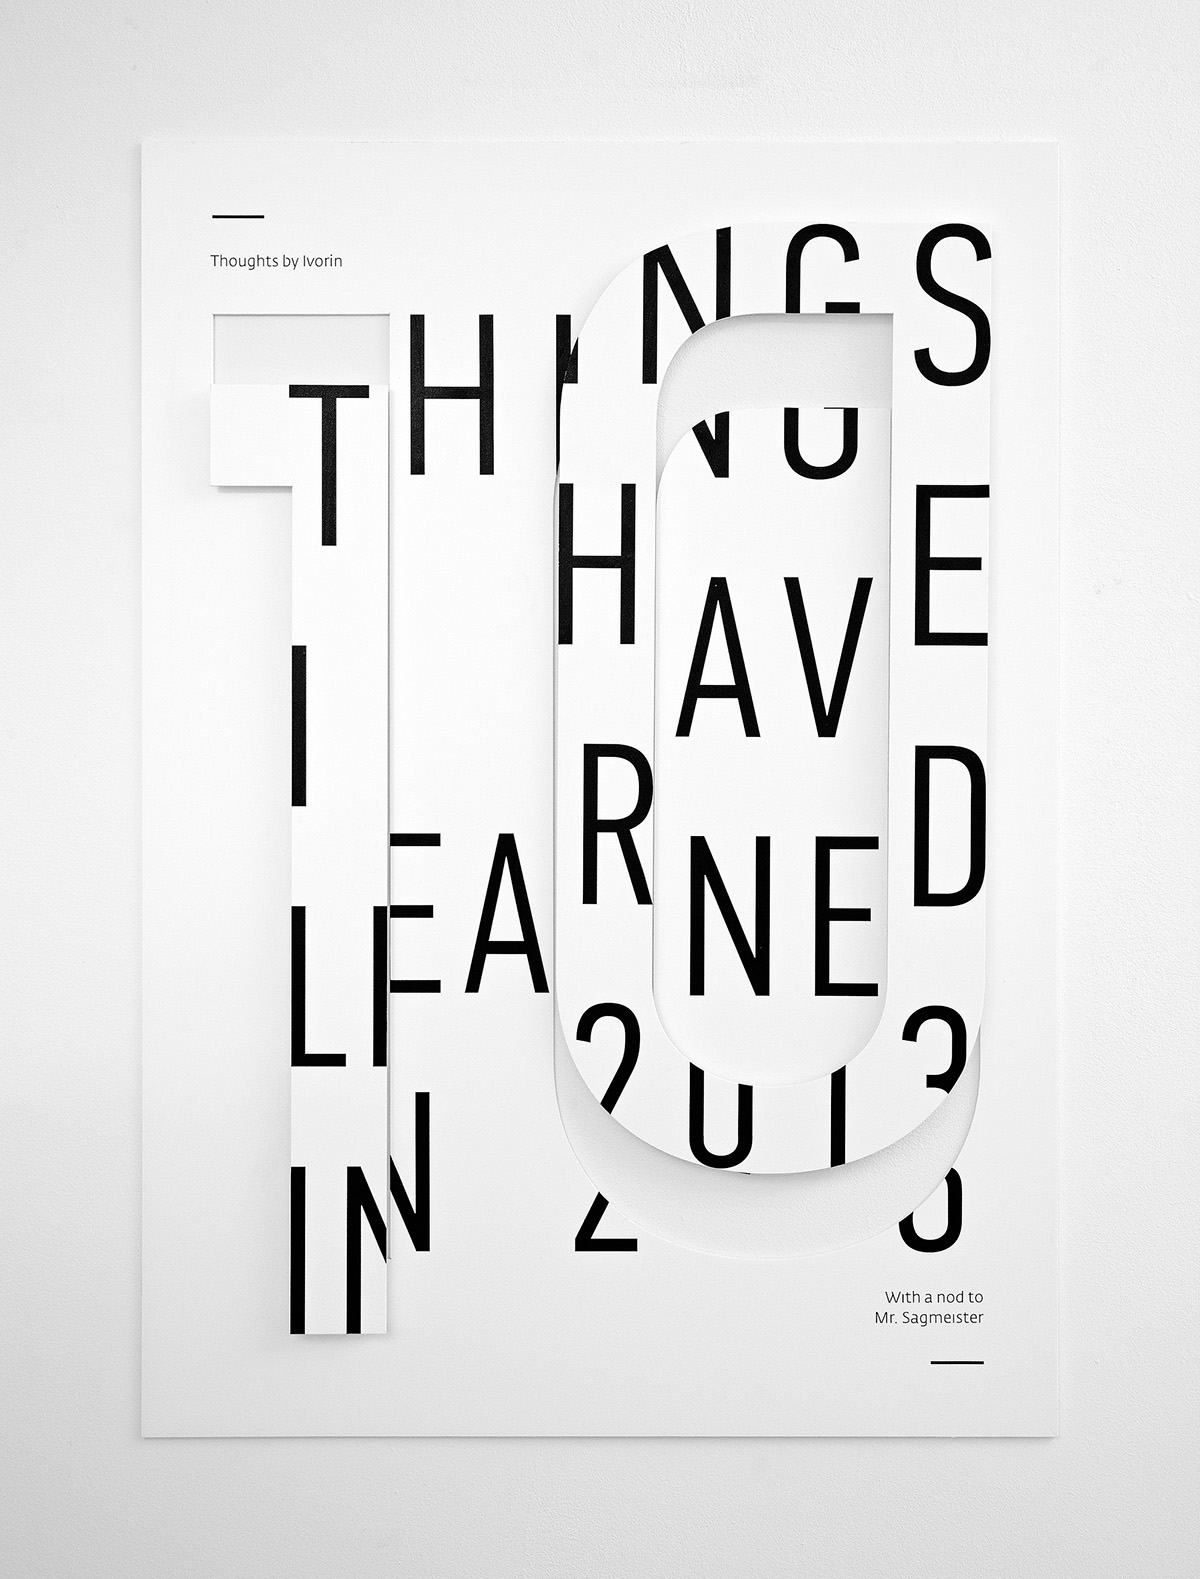 sagmeister Croatia poster Exhibition  minimalist typographic identity New York black White learn thing handmade cut paper